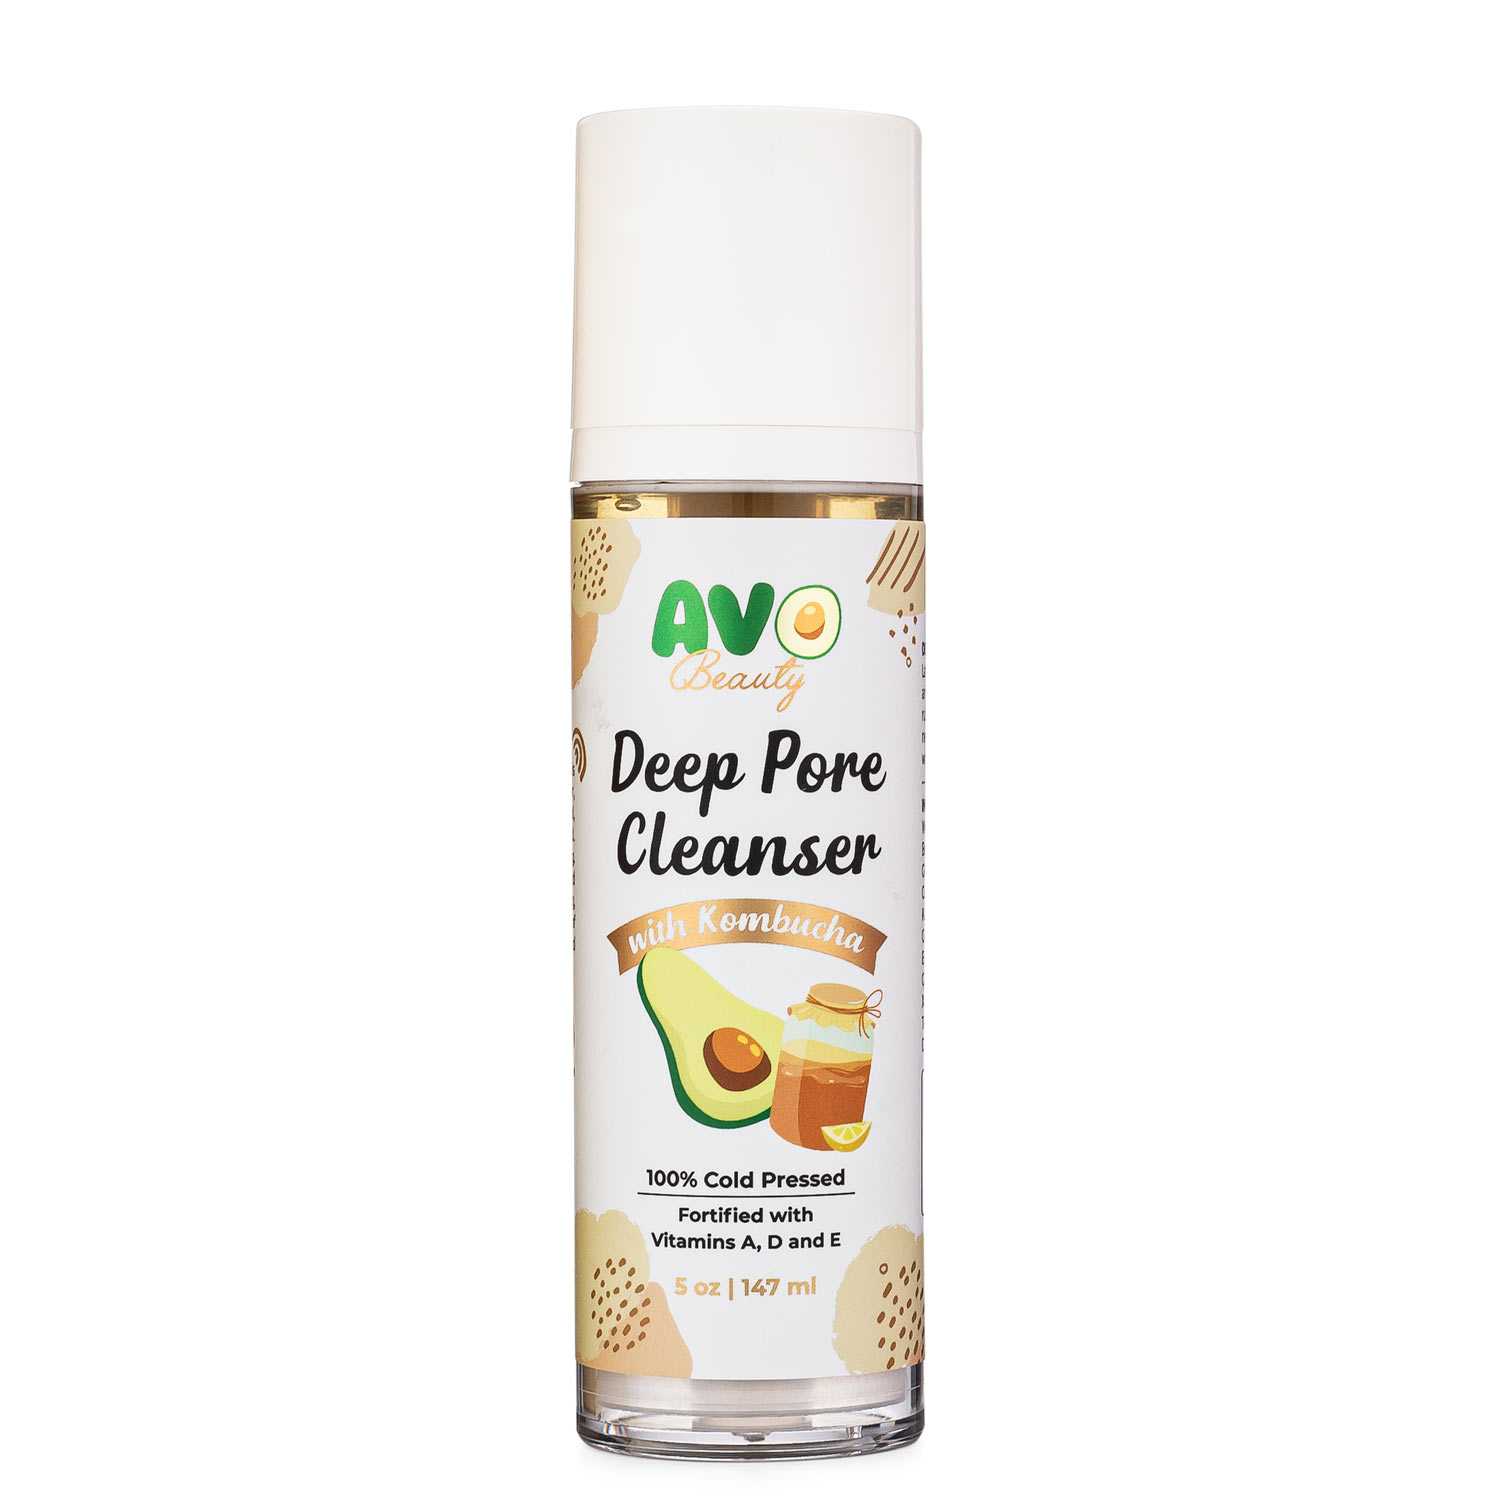 Deep Pore Cleanser Avo Beauty Image